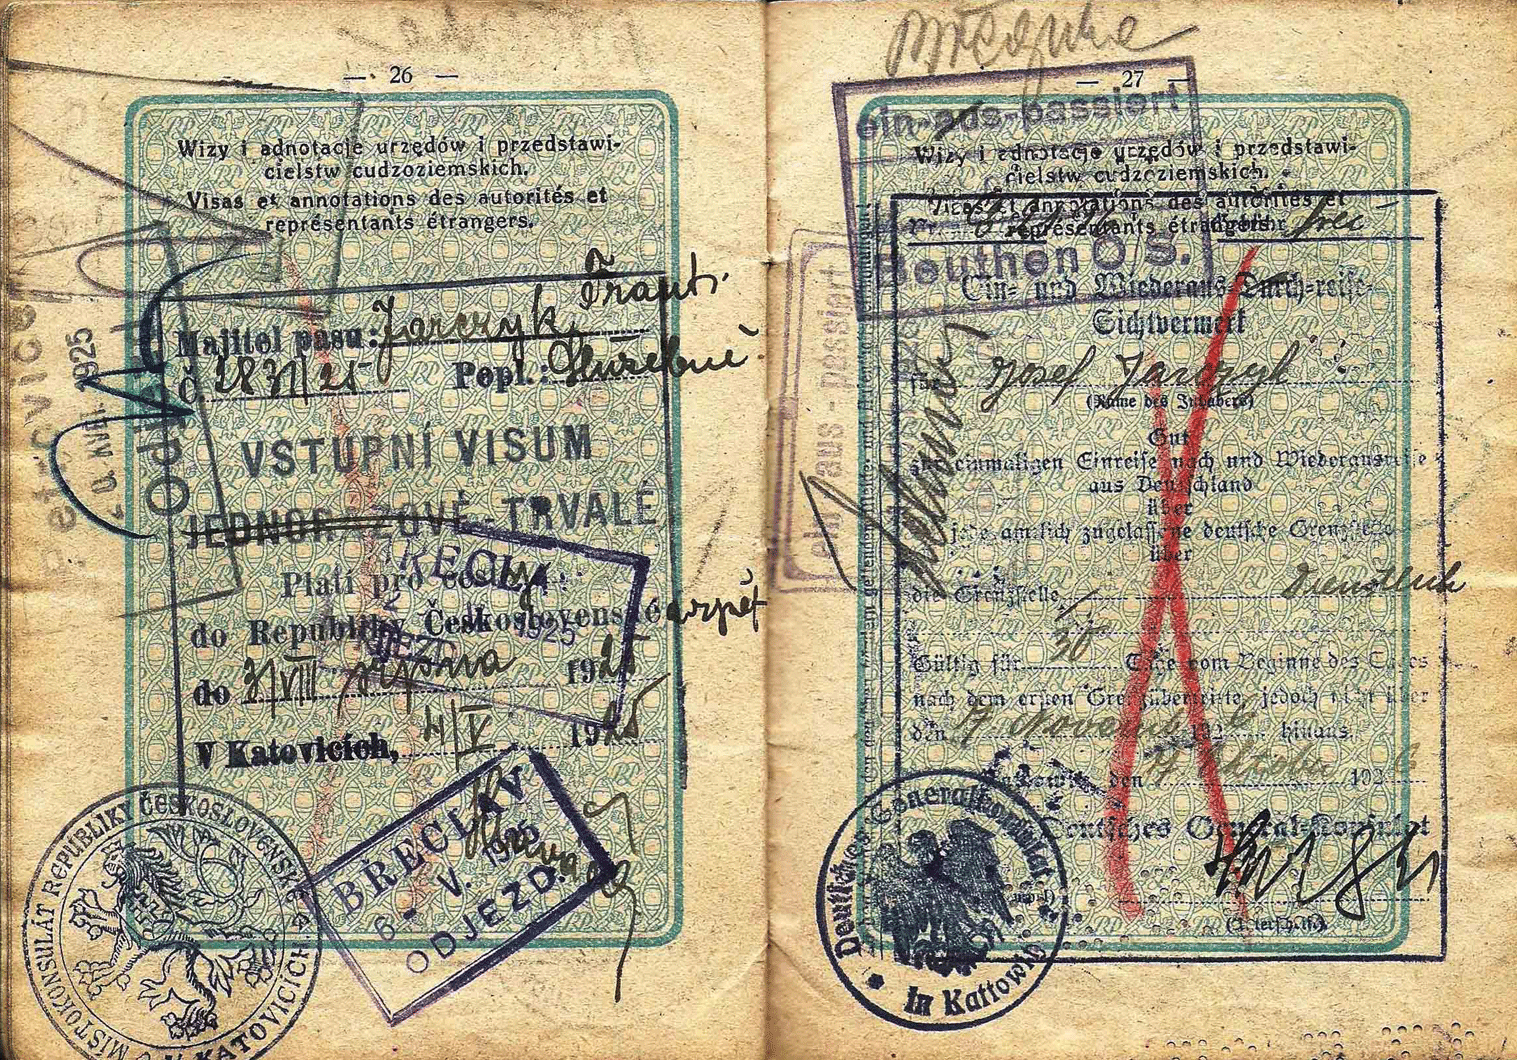 old Polish service passport